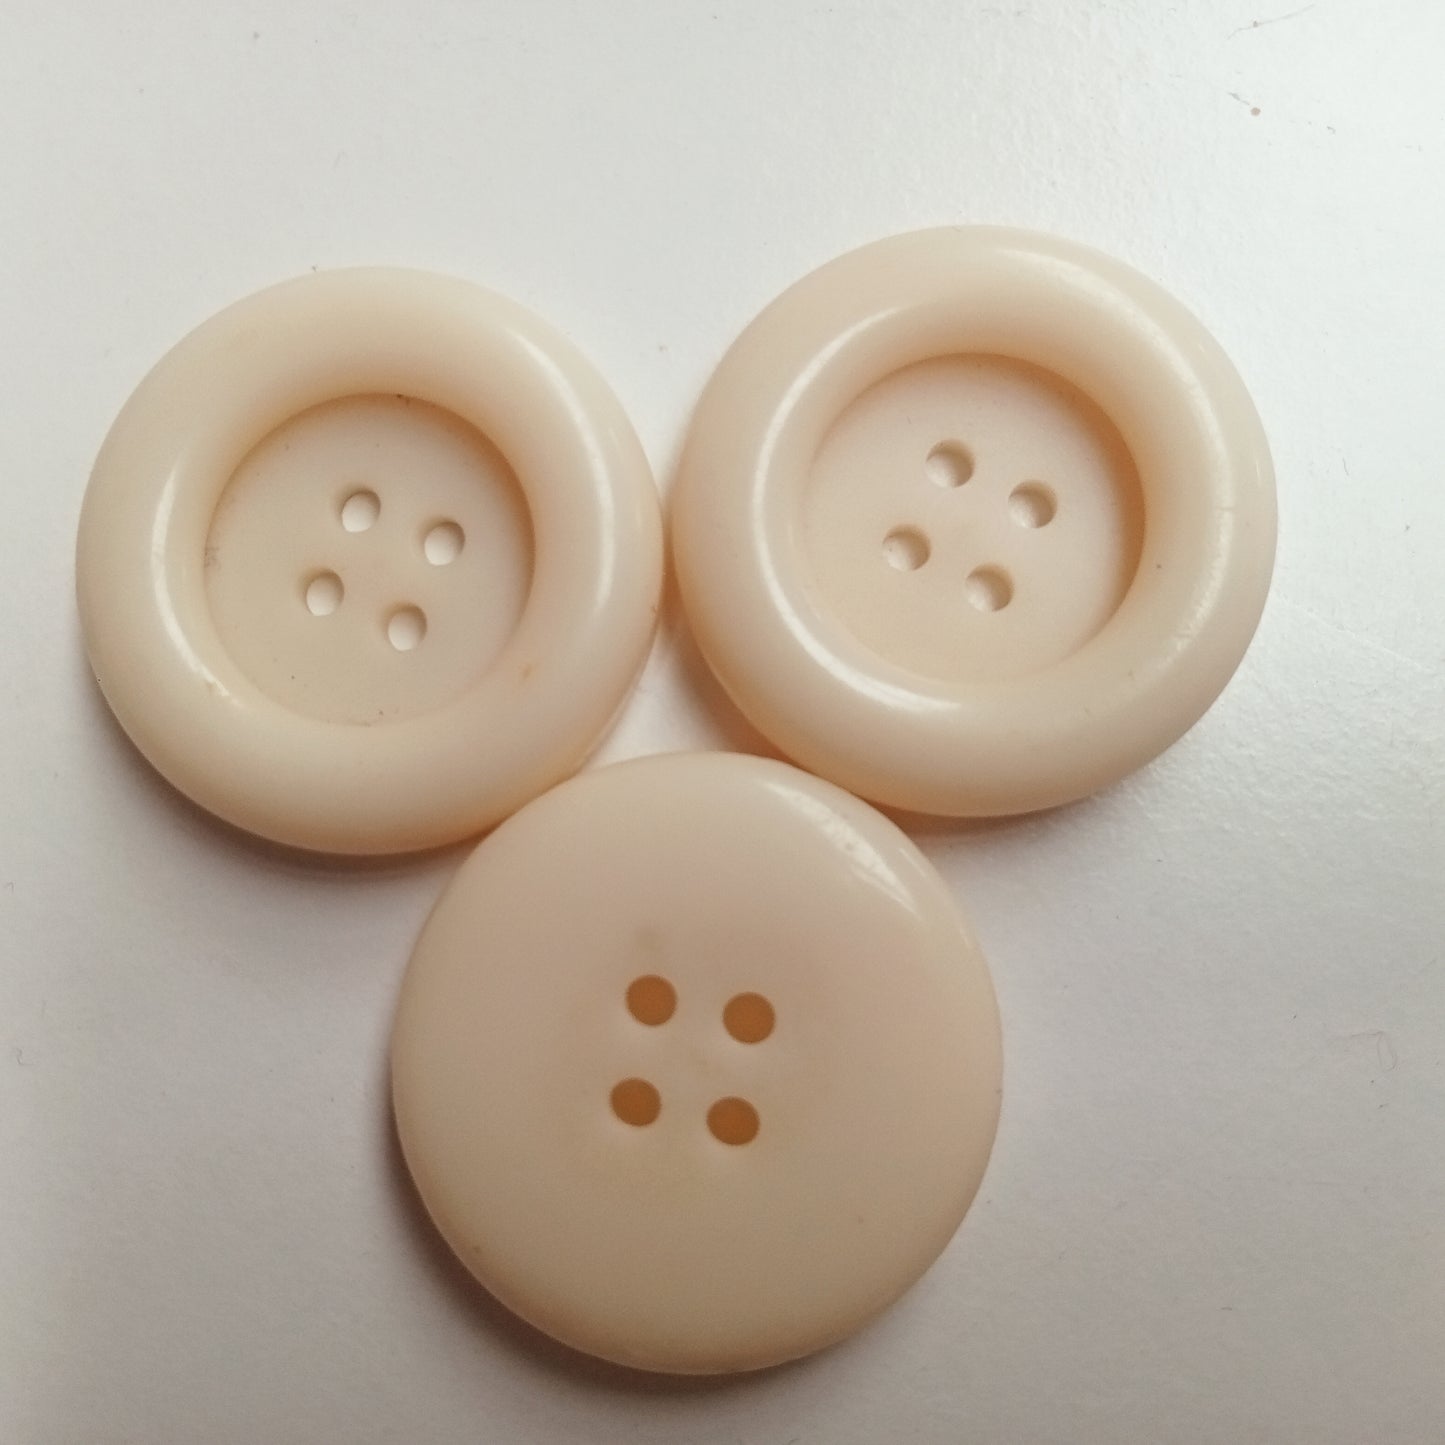 2cm cream buttons - 6